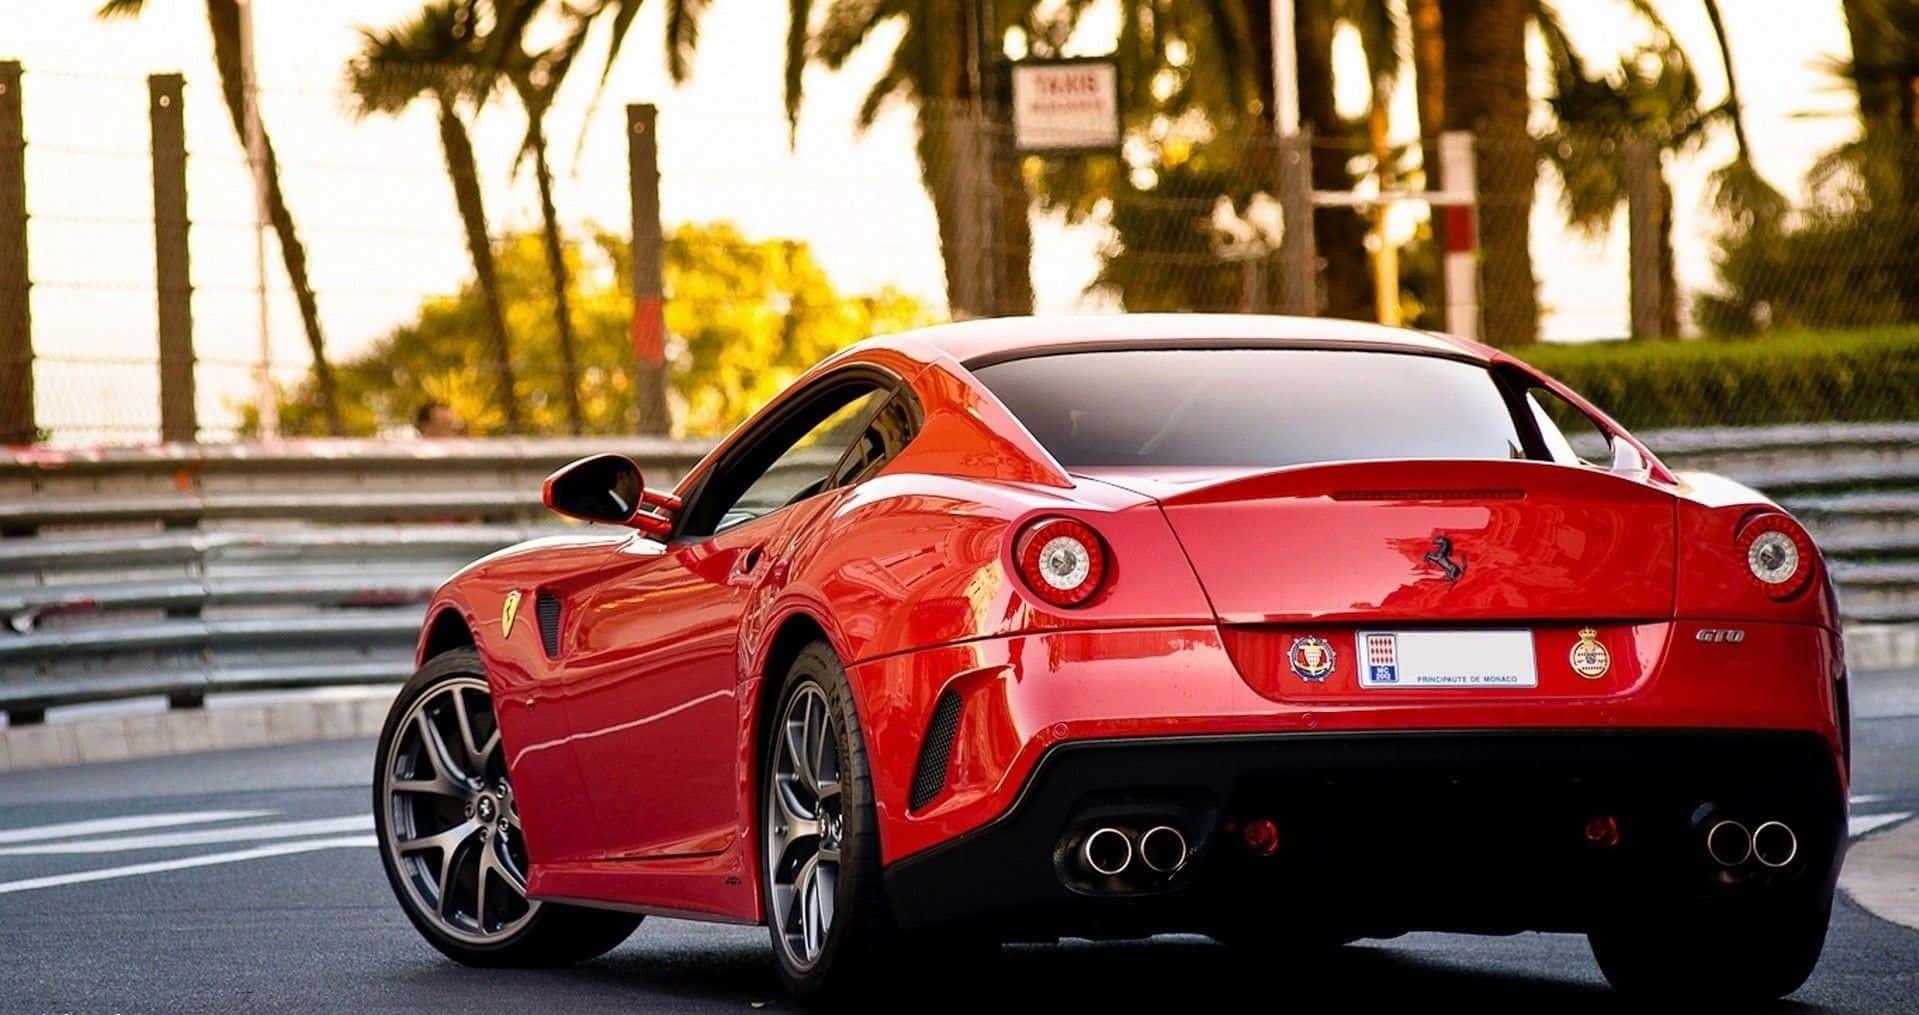 A Sleek Ferrari Gtb Fiorano In Action Wallpaper